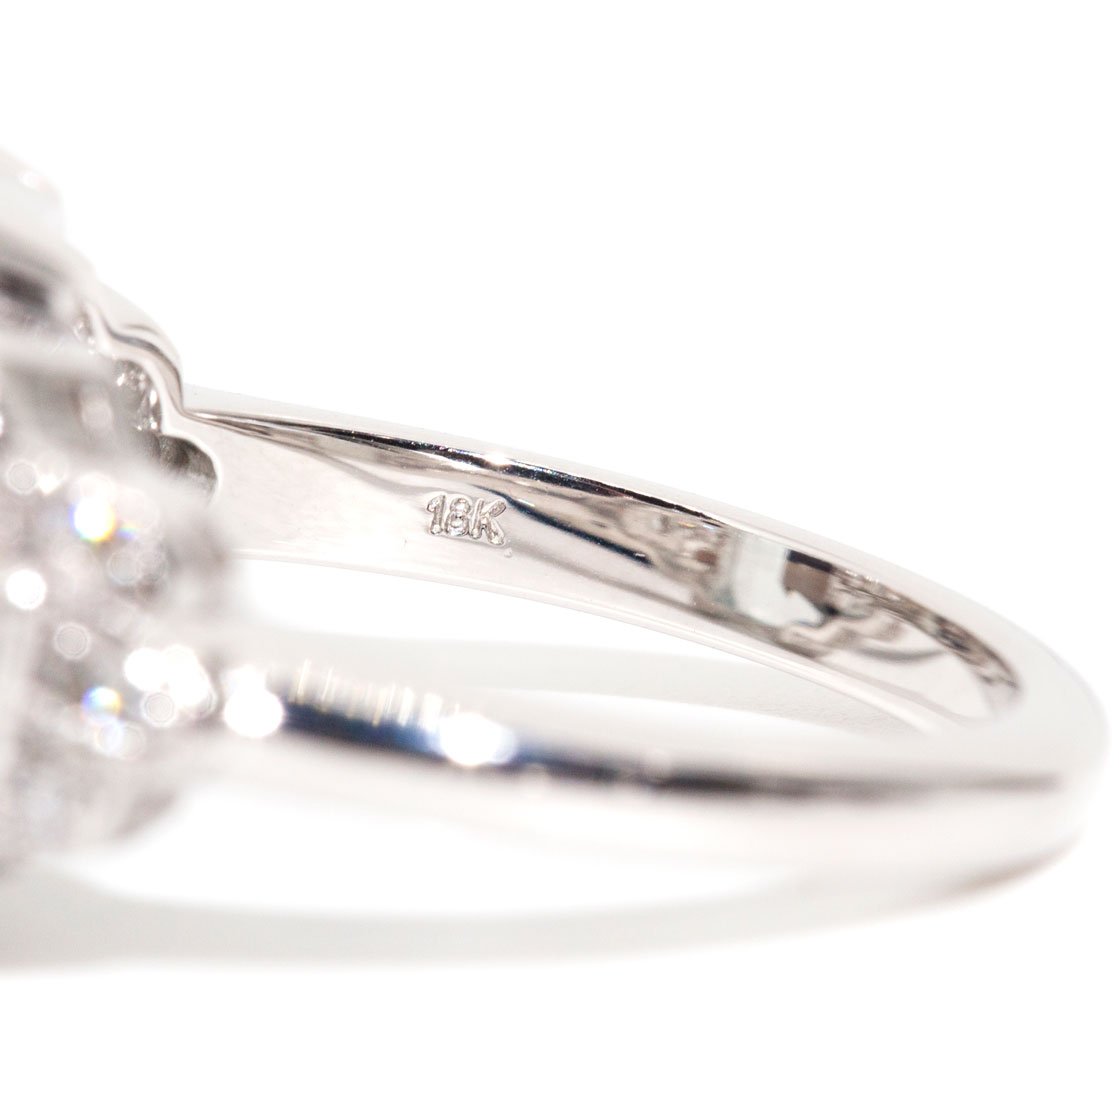 Ryan 18 Carat White Gold Aquamarine & Diamond Ring Rings Imperial Jewellery 